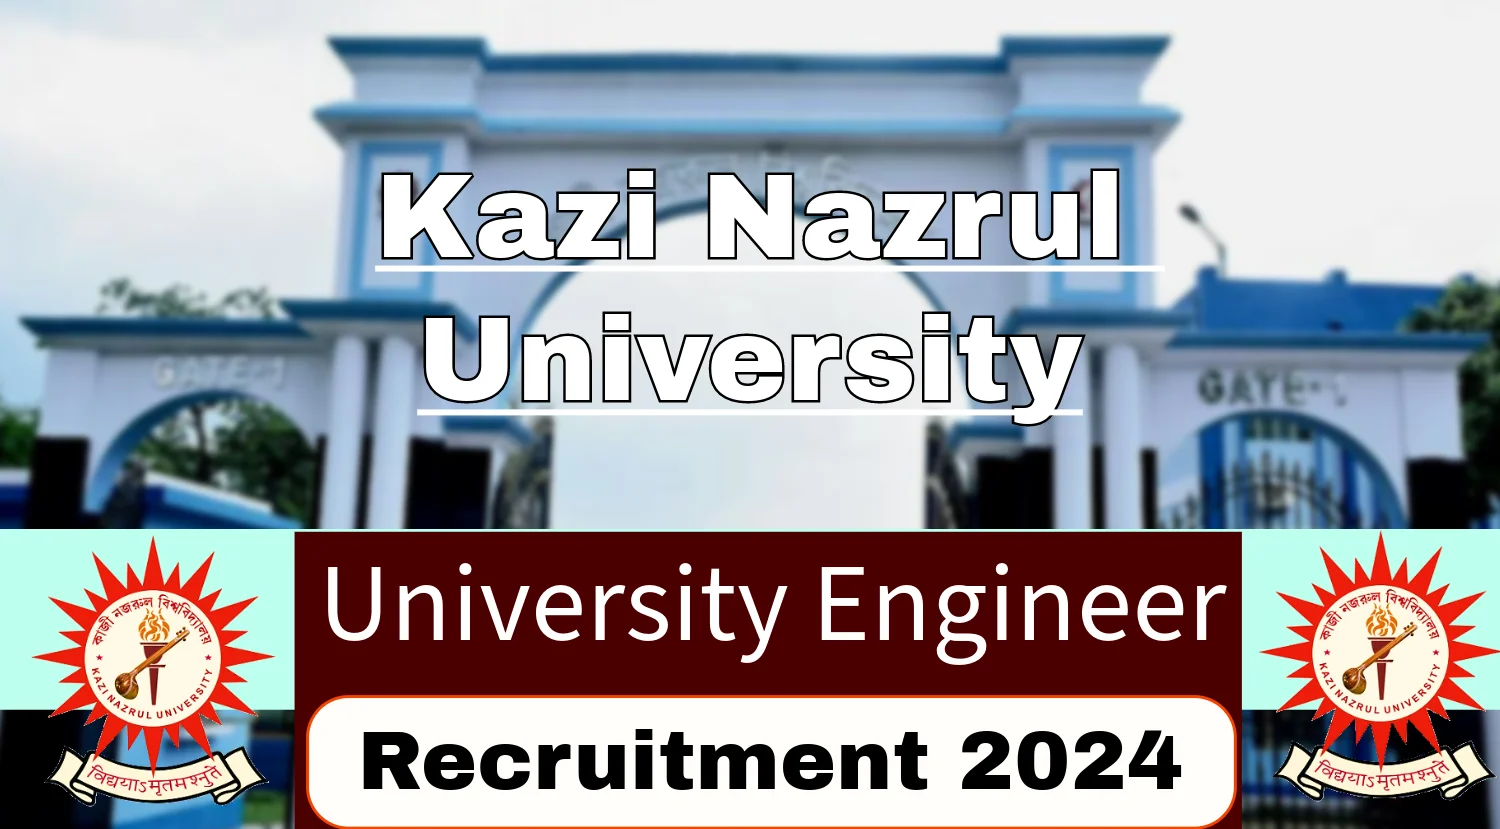 Kazi Nazrul University Engineer Recruitment 2024 Notification